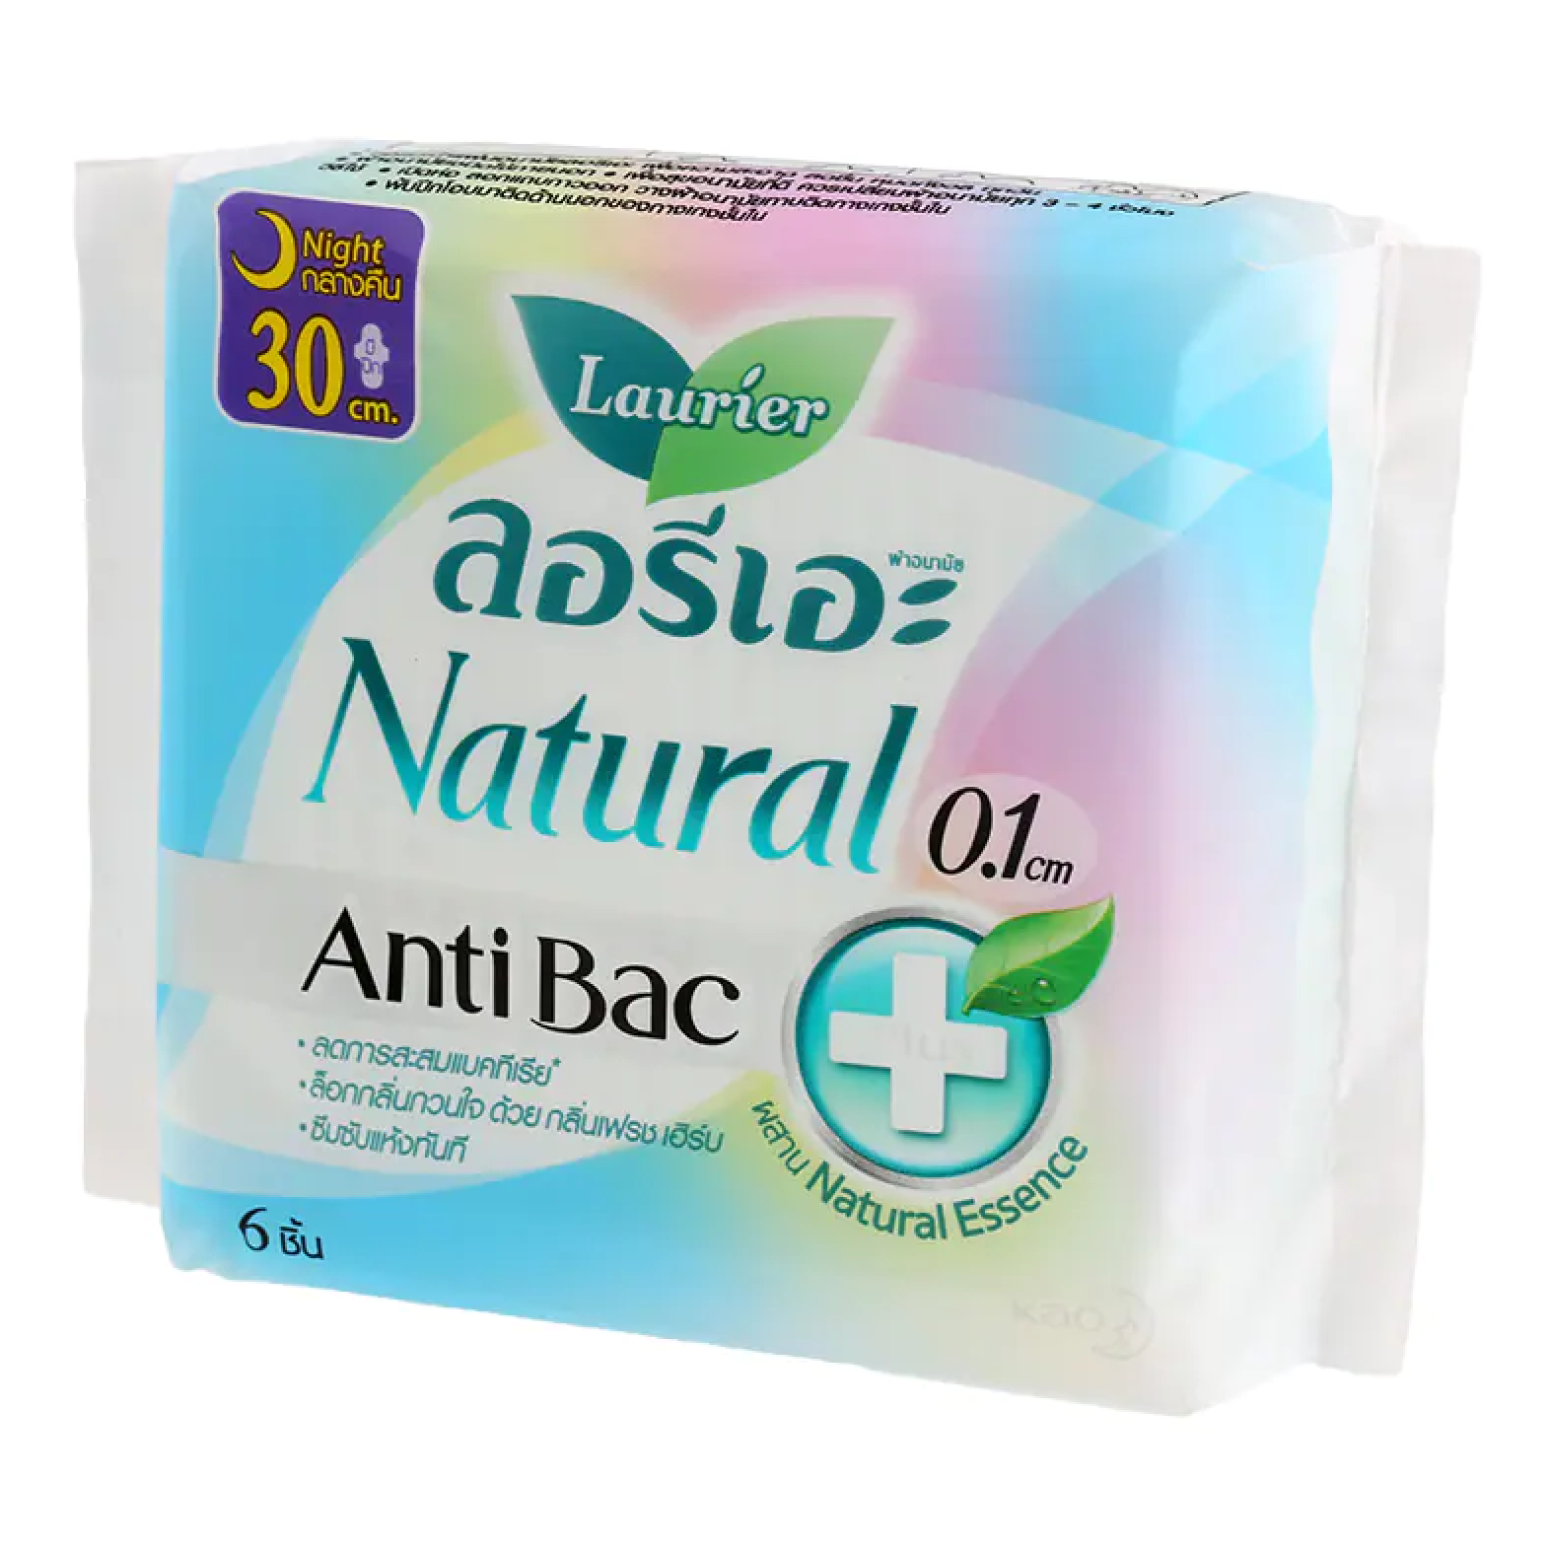 Laurier Natural Anti Bac Plus 0.1 Sanitary Napkin Night Wing 30cm 6pcs